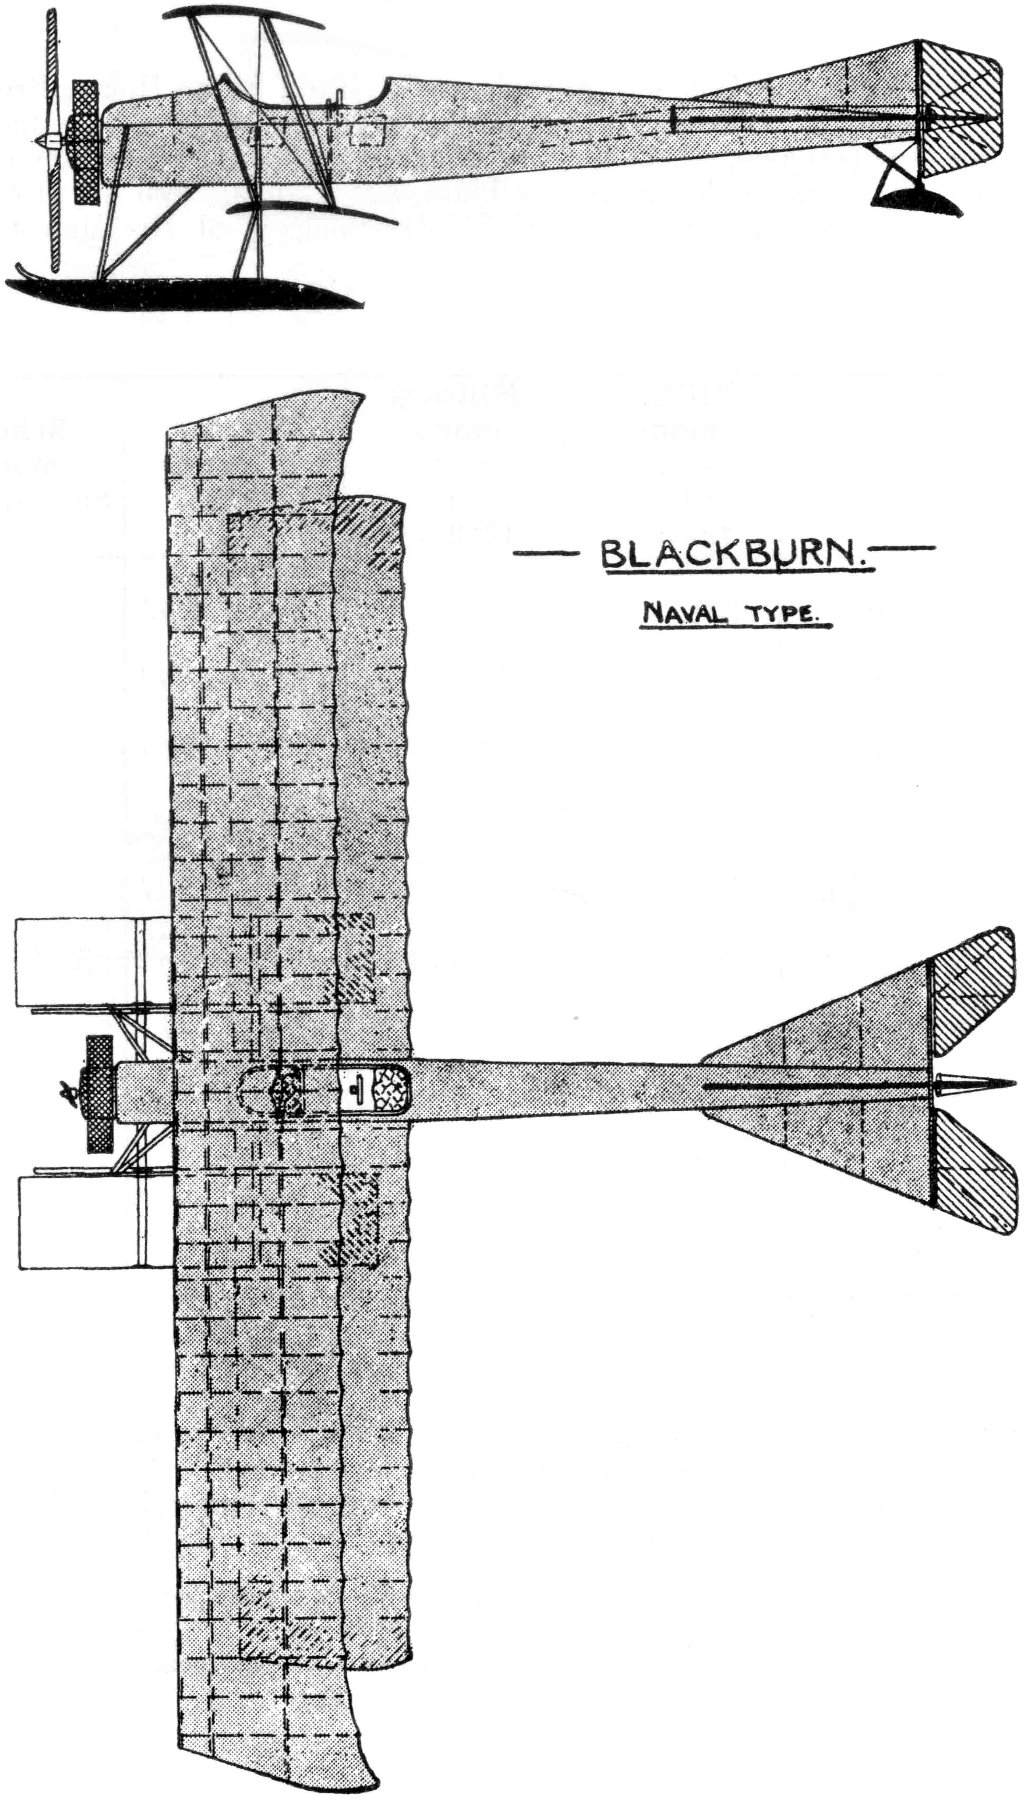 BLACKBURN. Naval Type.